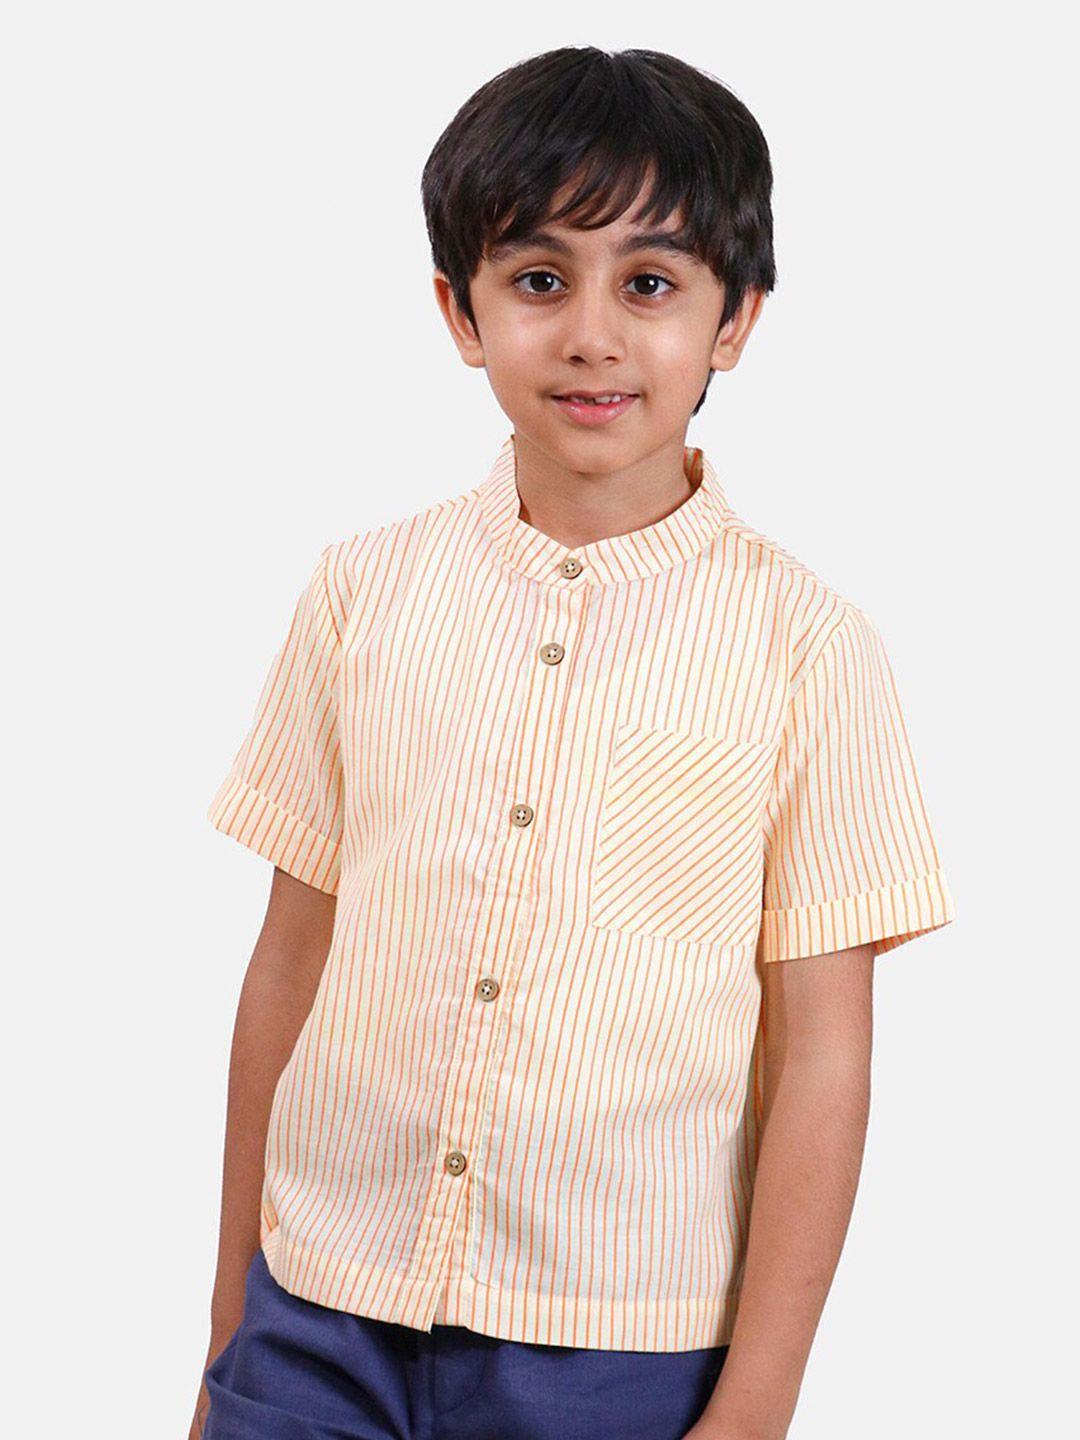 whistle-&-hops-boys-classic-opaque-striped-mandarin-collar-casual-pure-cotton-shirt